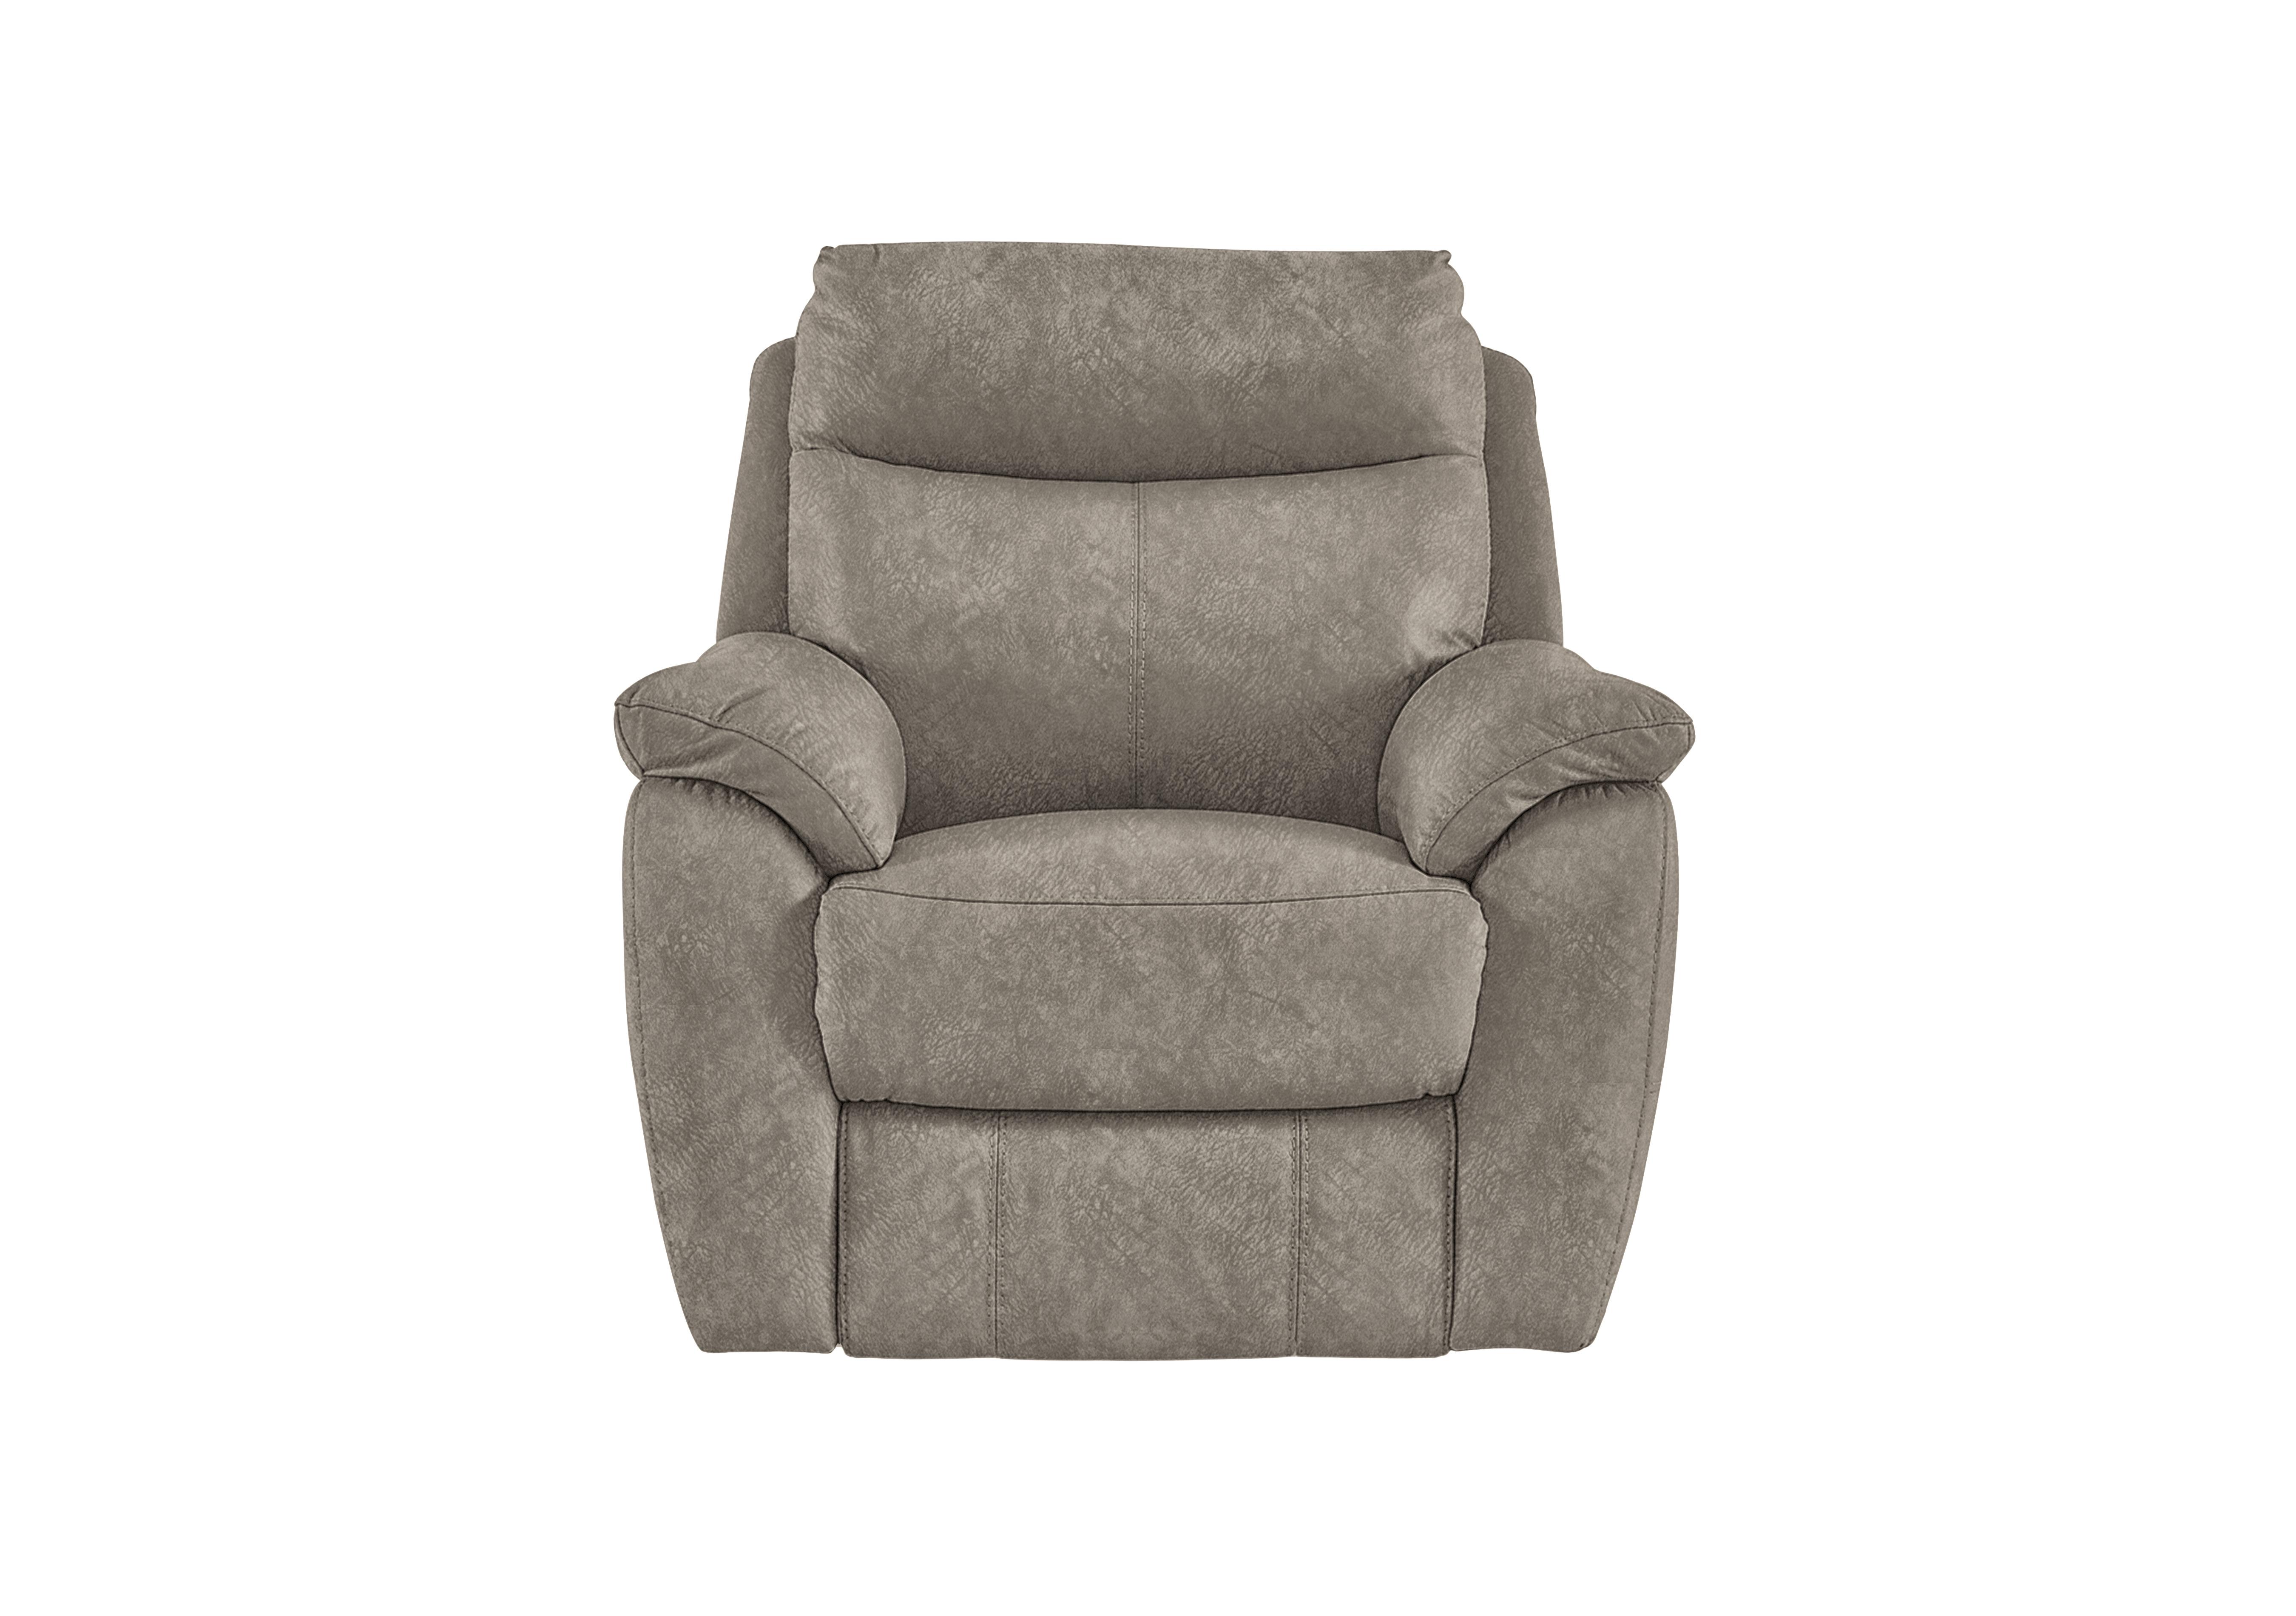 Snug Fabric Armchair in Bfa-Bnn-R29 Fv1 Mink on Furniture Village